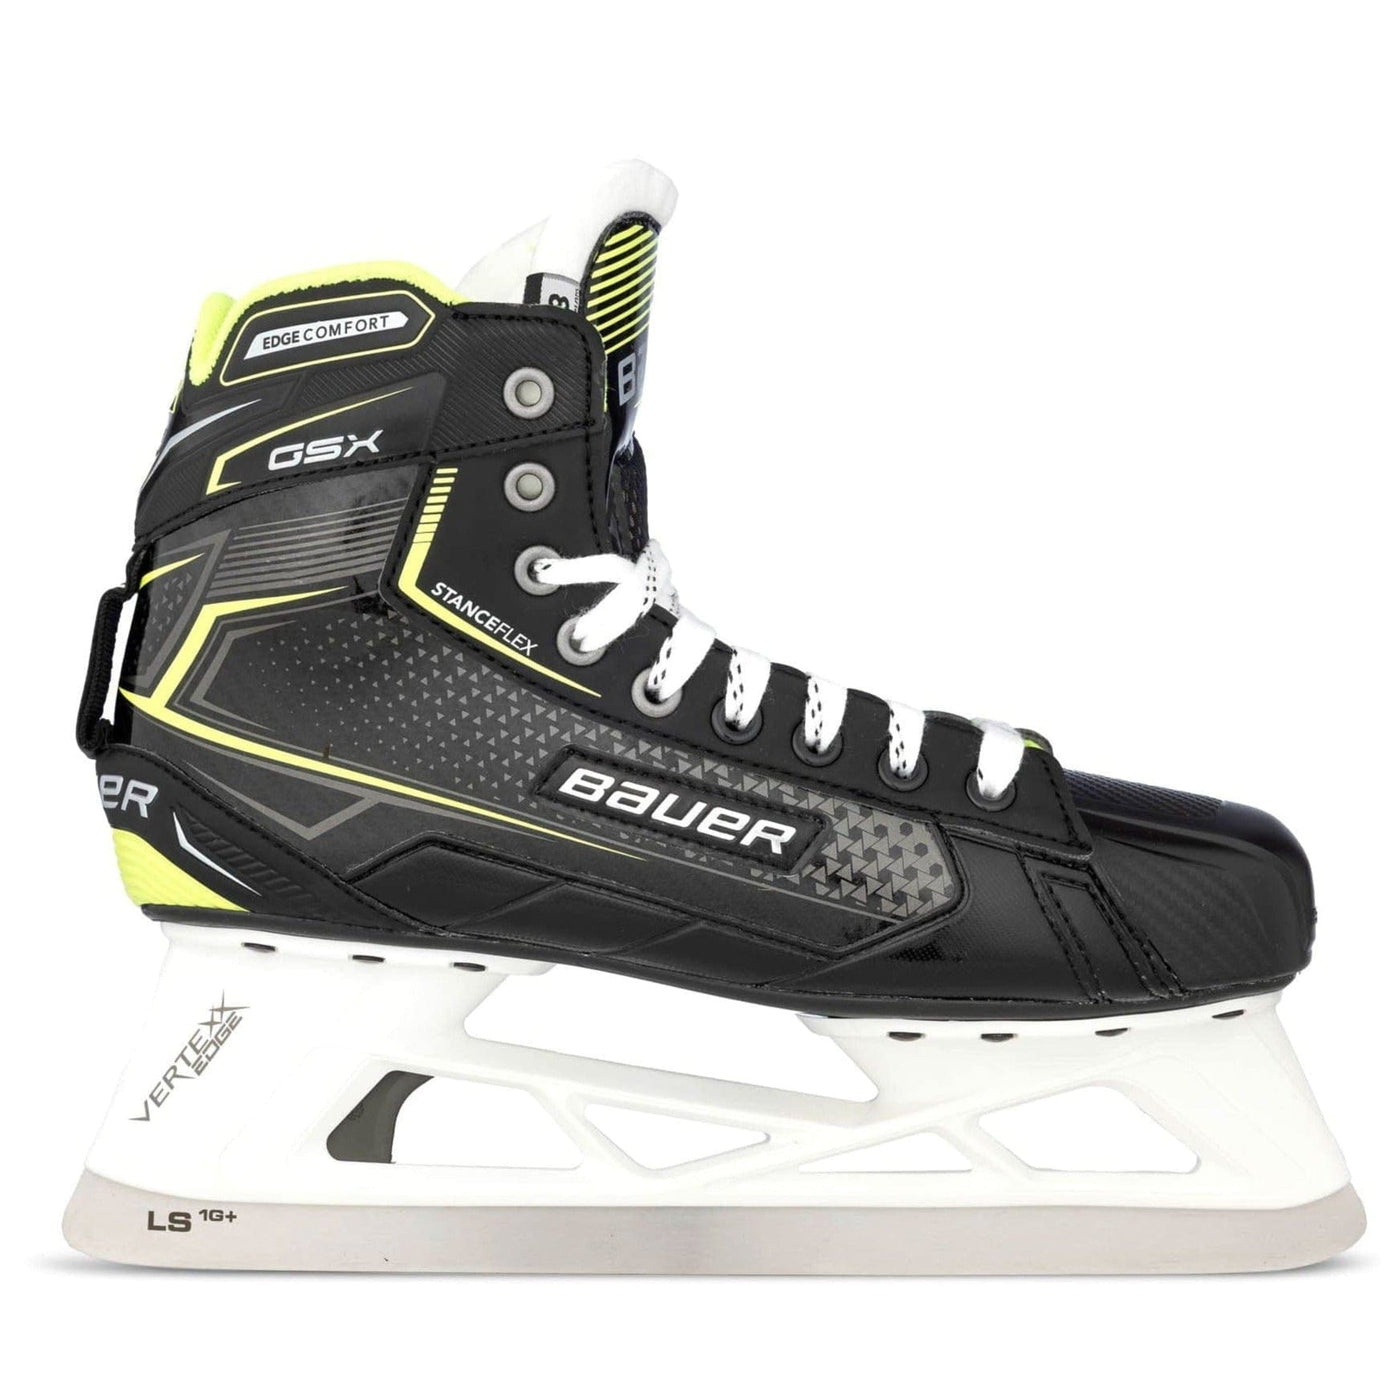 Bauer GSX Junior Goalie Skates S21 - The Hockey Shop Source For Sports